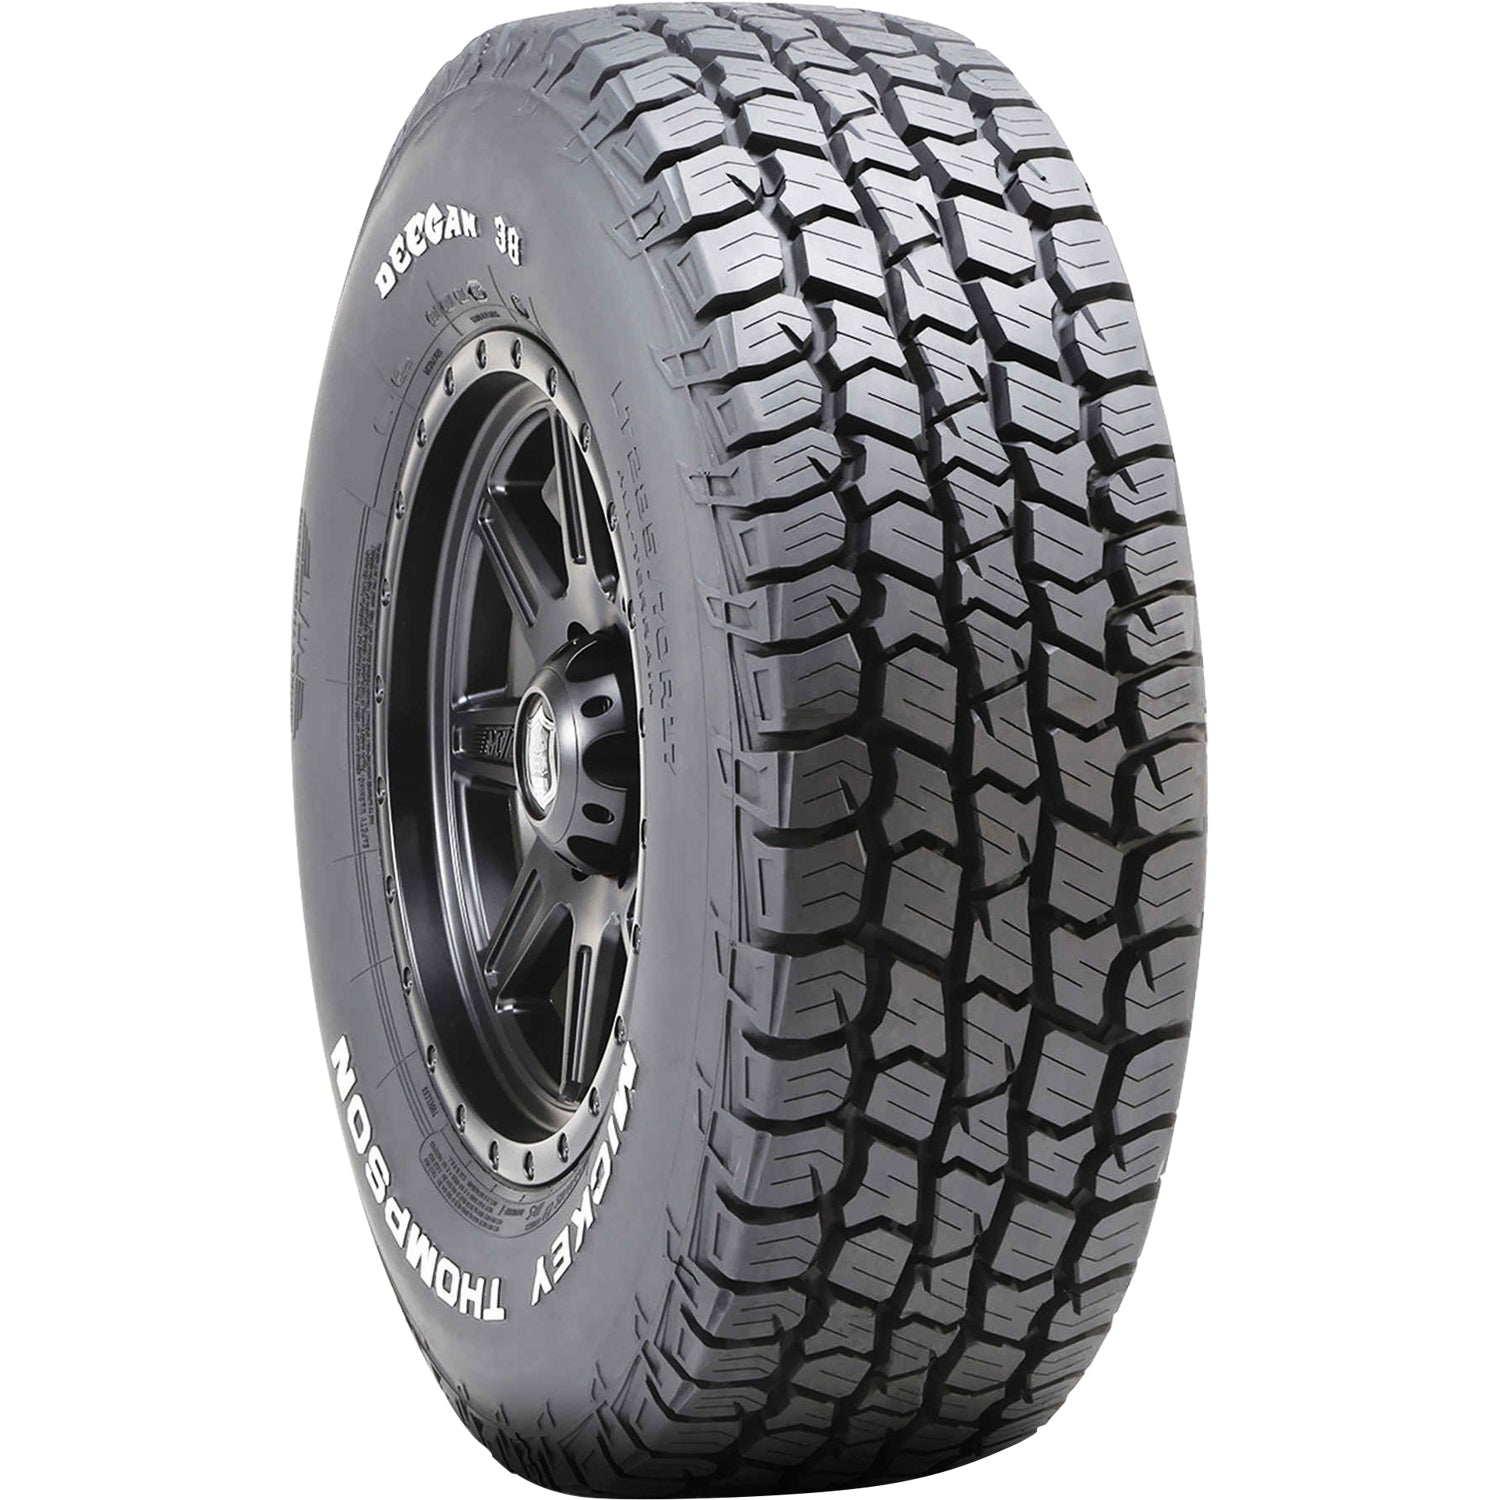 MICKEY THOMPSON DEEGAN 38 AT 265/70R16 (30.4X10.8R 16) Tires